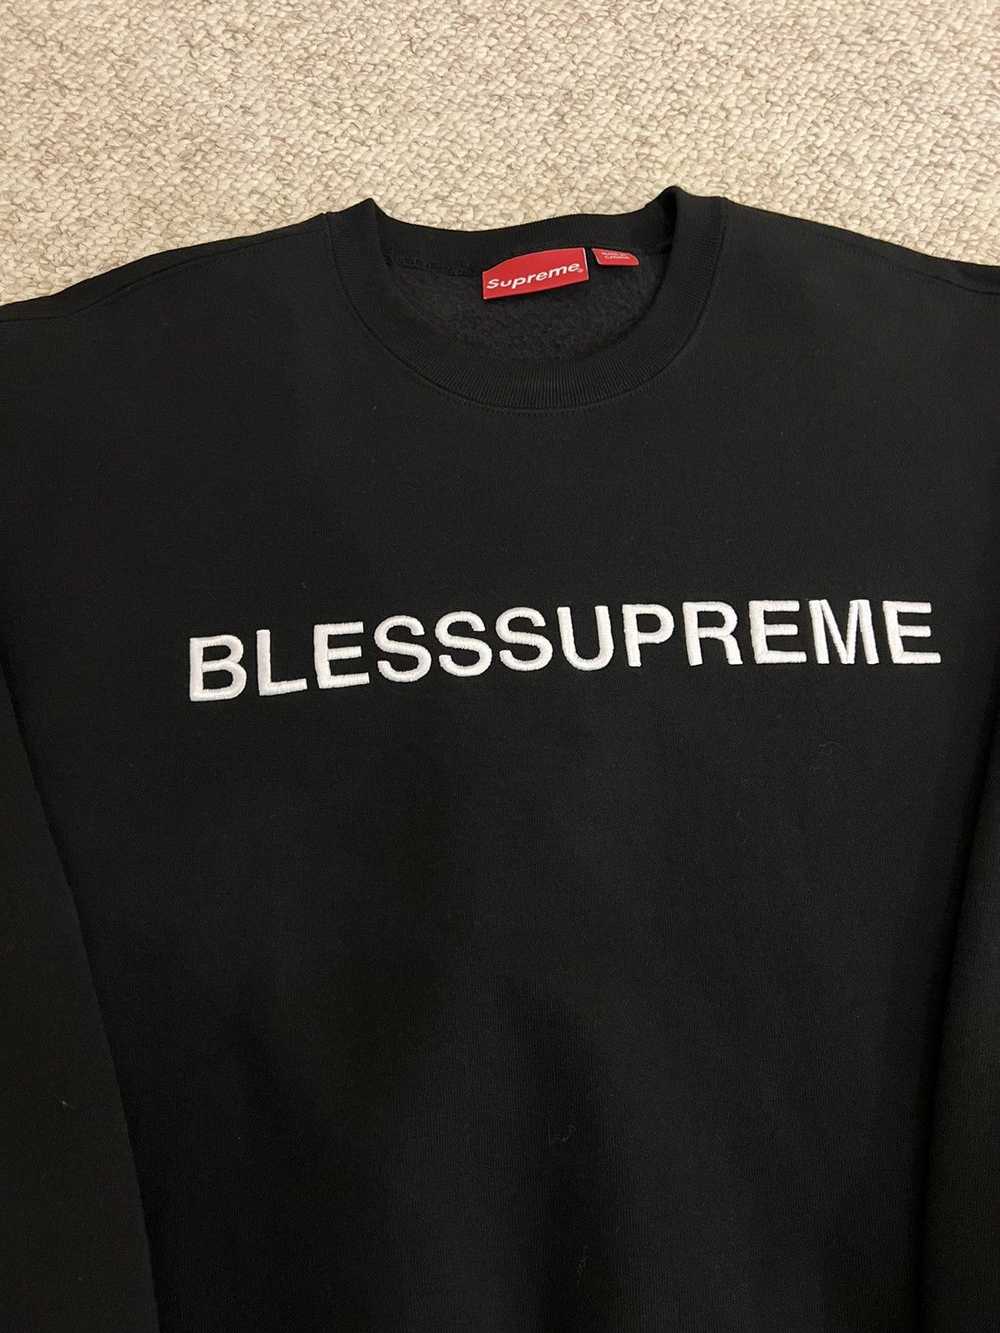 Supreme Bless Supreme sweater / Black - image 3